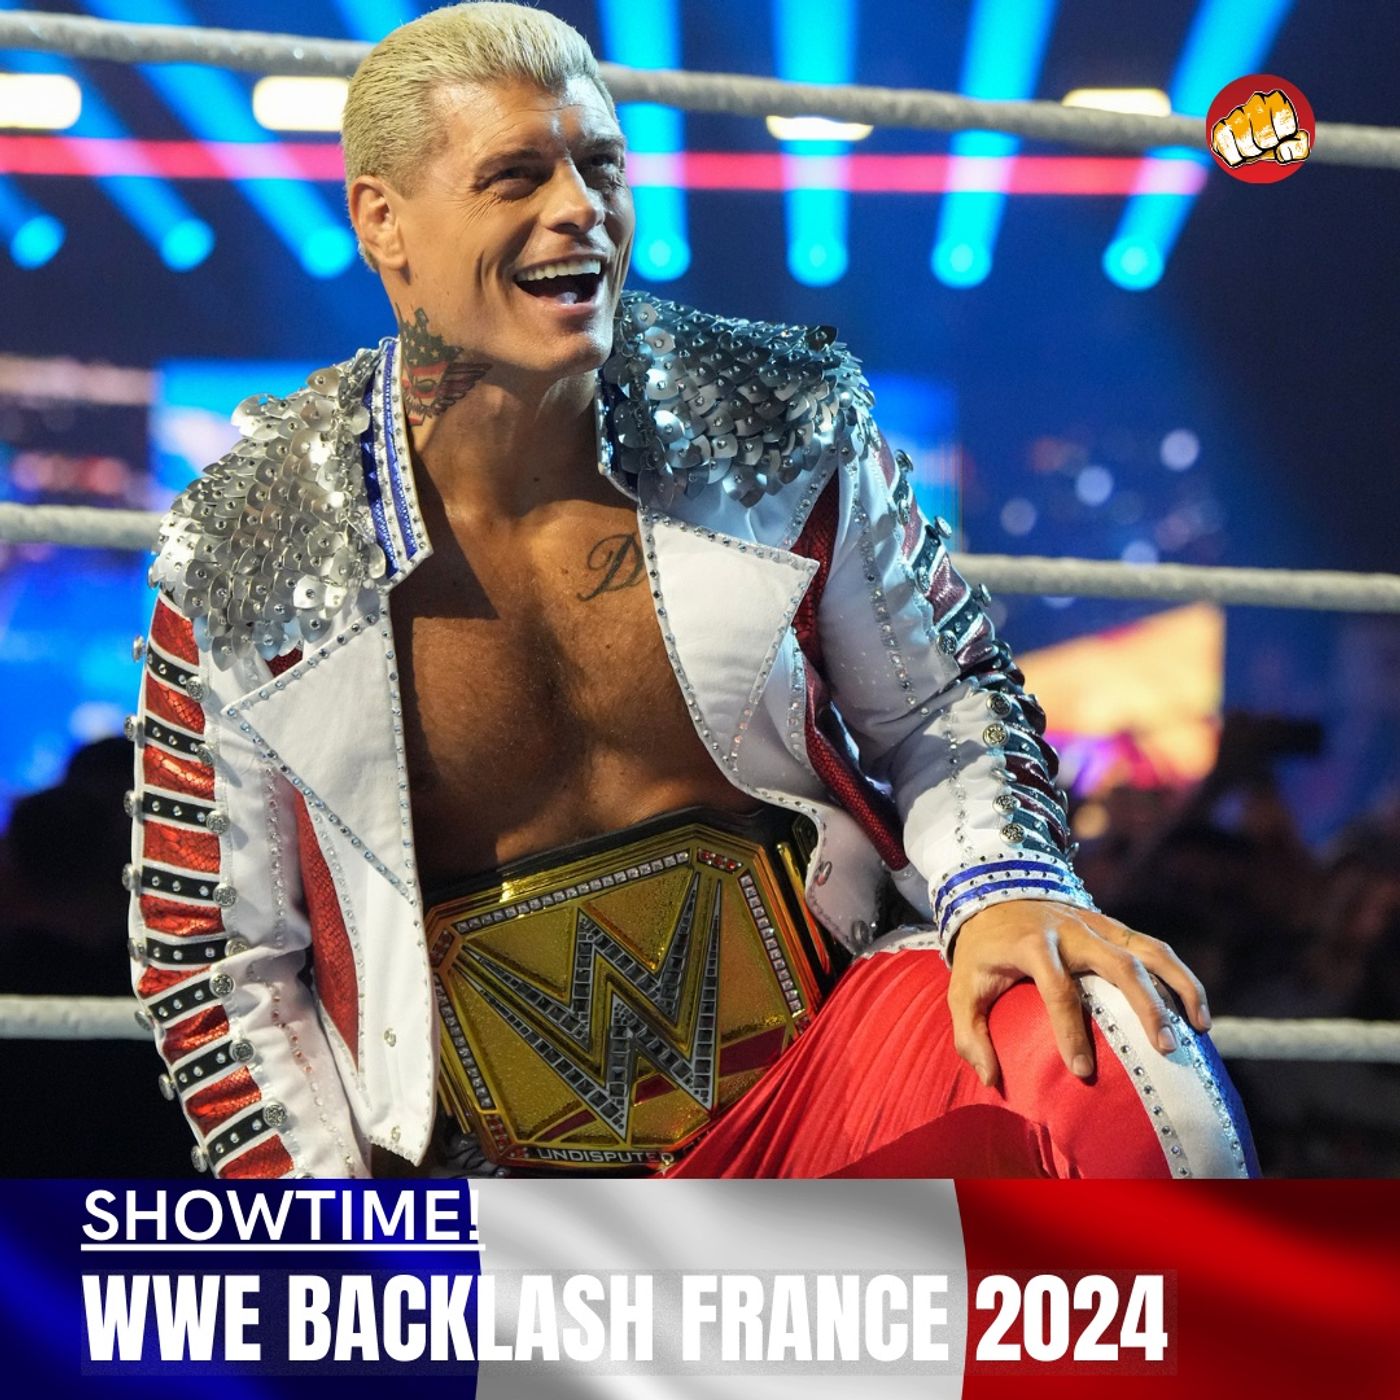 SHOWTIME! WWE Backlash France (4.5.2024) im ausführlichen REVIEW!